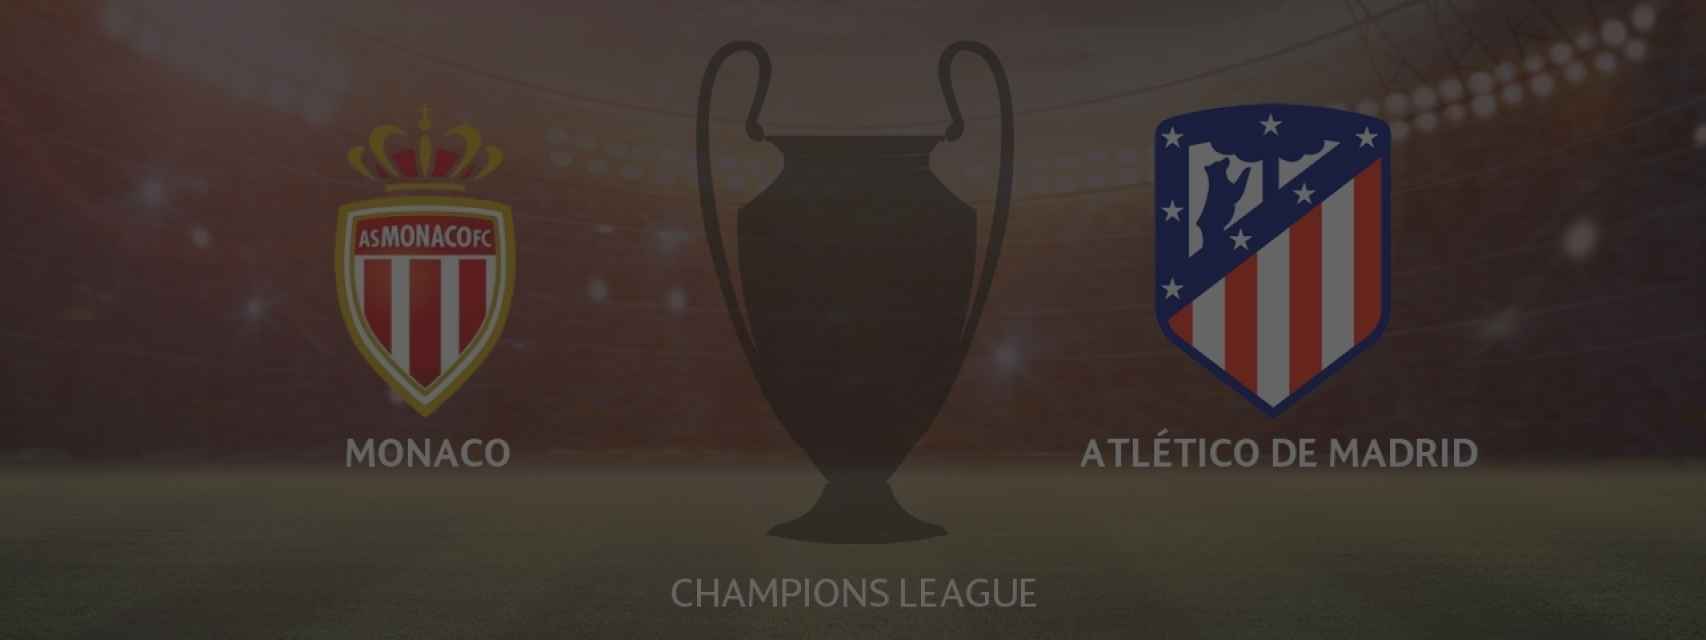 Monaco - Atlético de Madrid Champions League